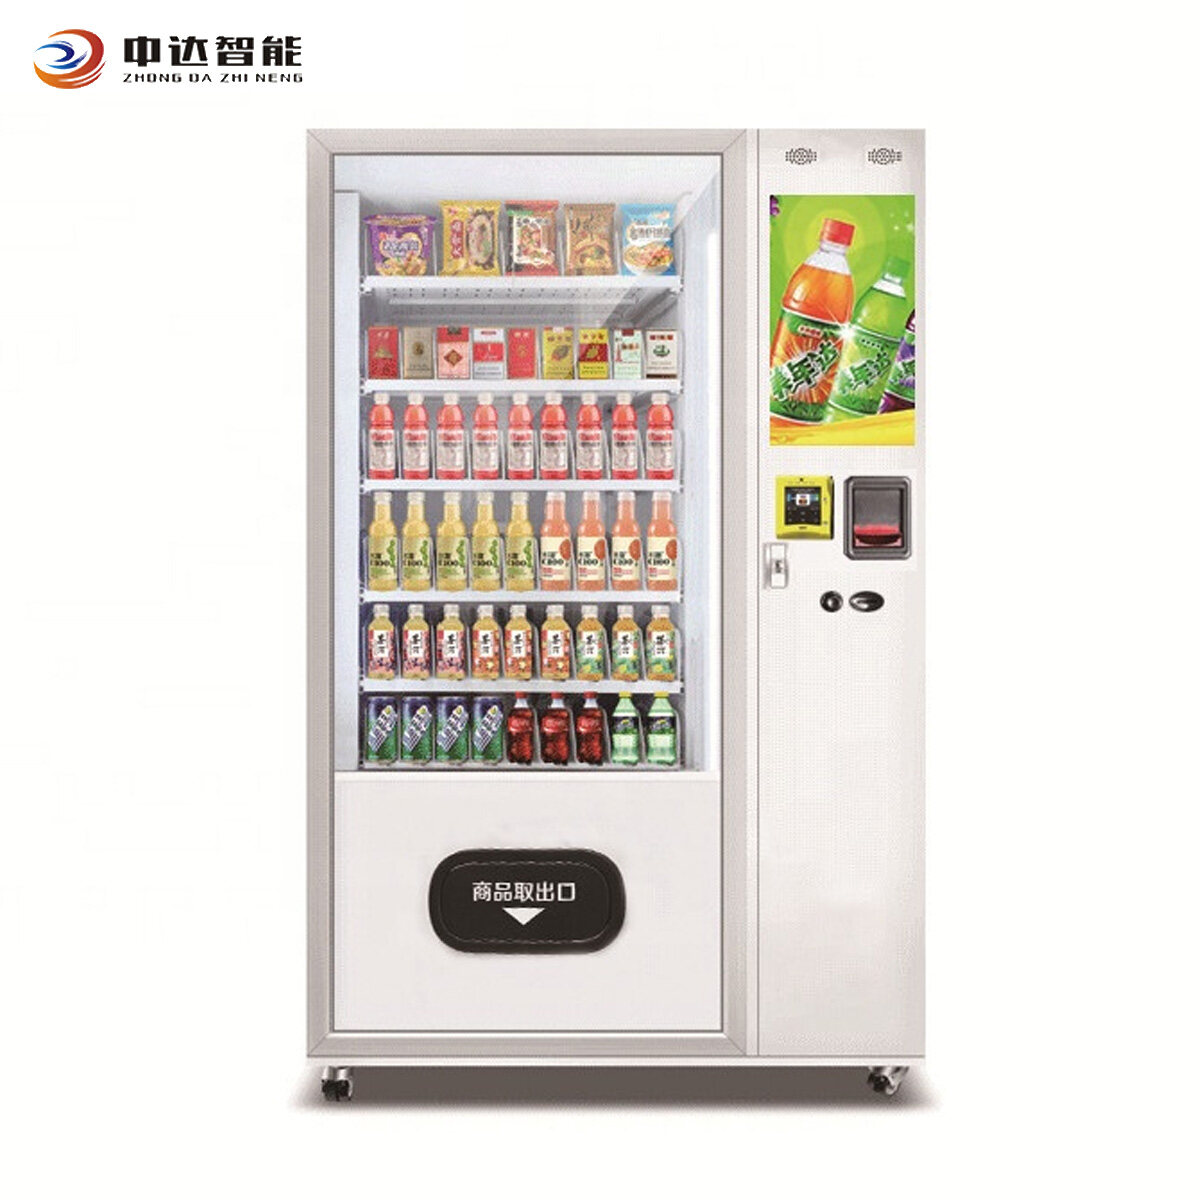 Wholesale countertop drink vending machine,Custom tabletop drink vending machine,home drink vending machine For Sale,snack drink vending machine Manufacturer